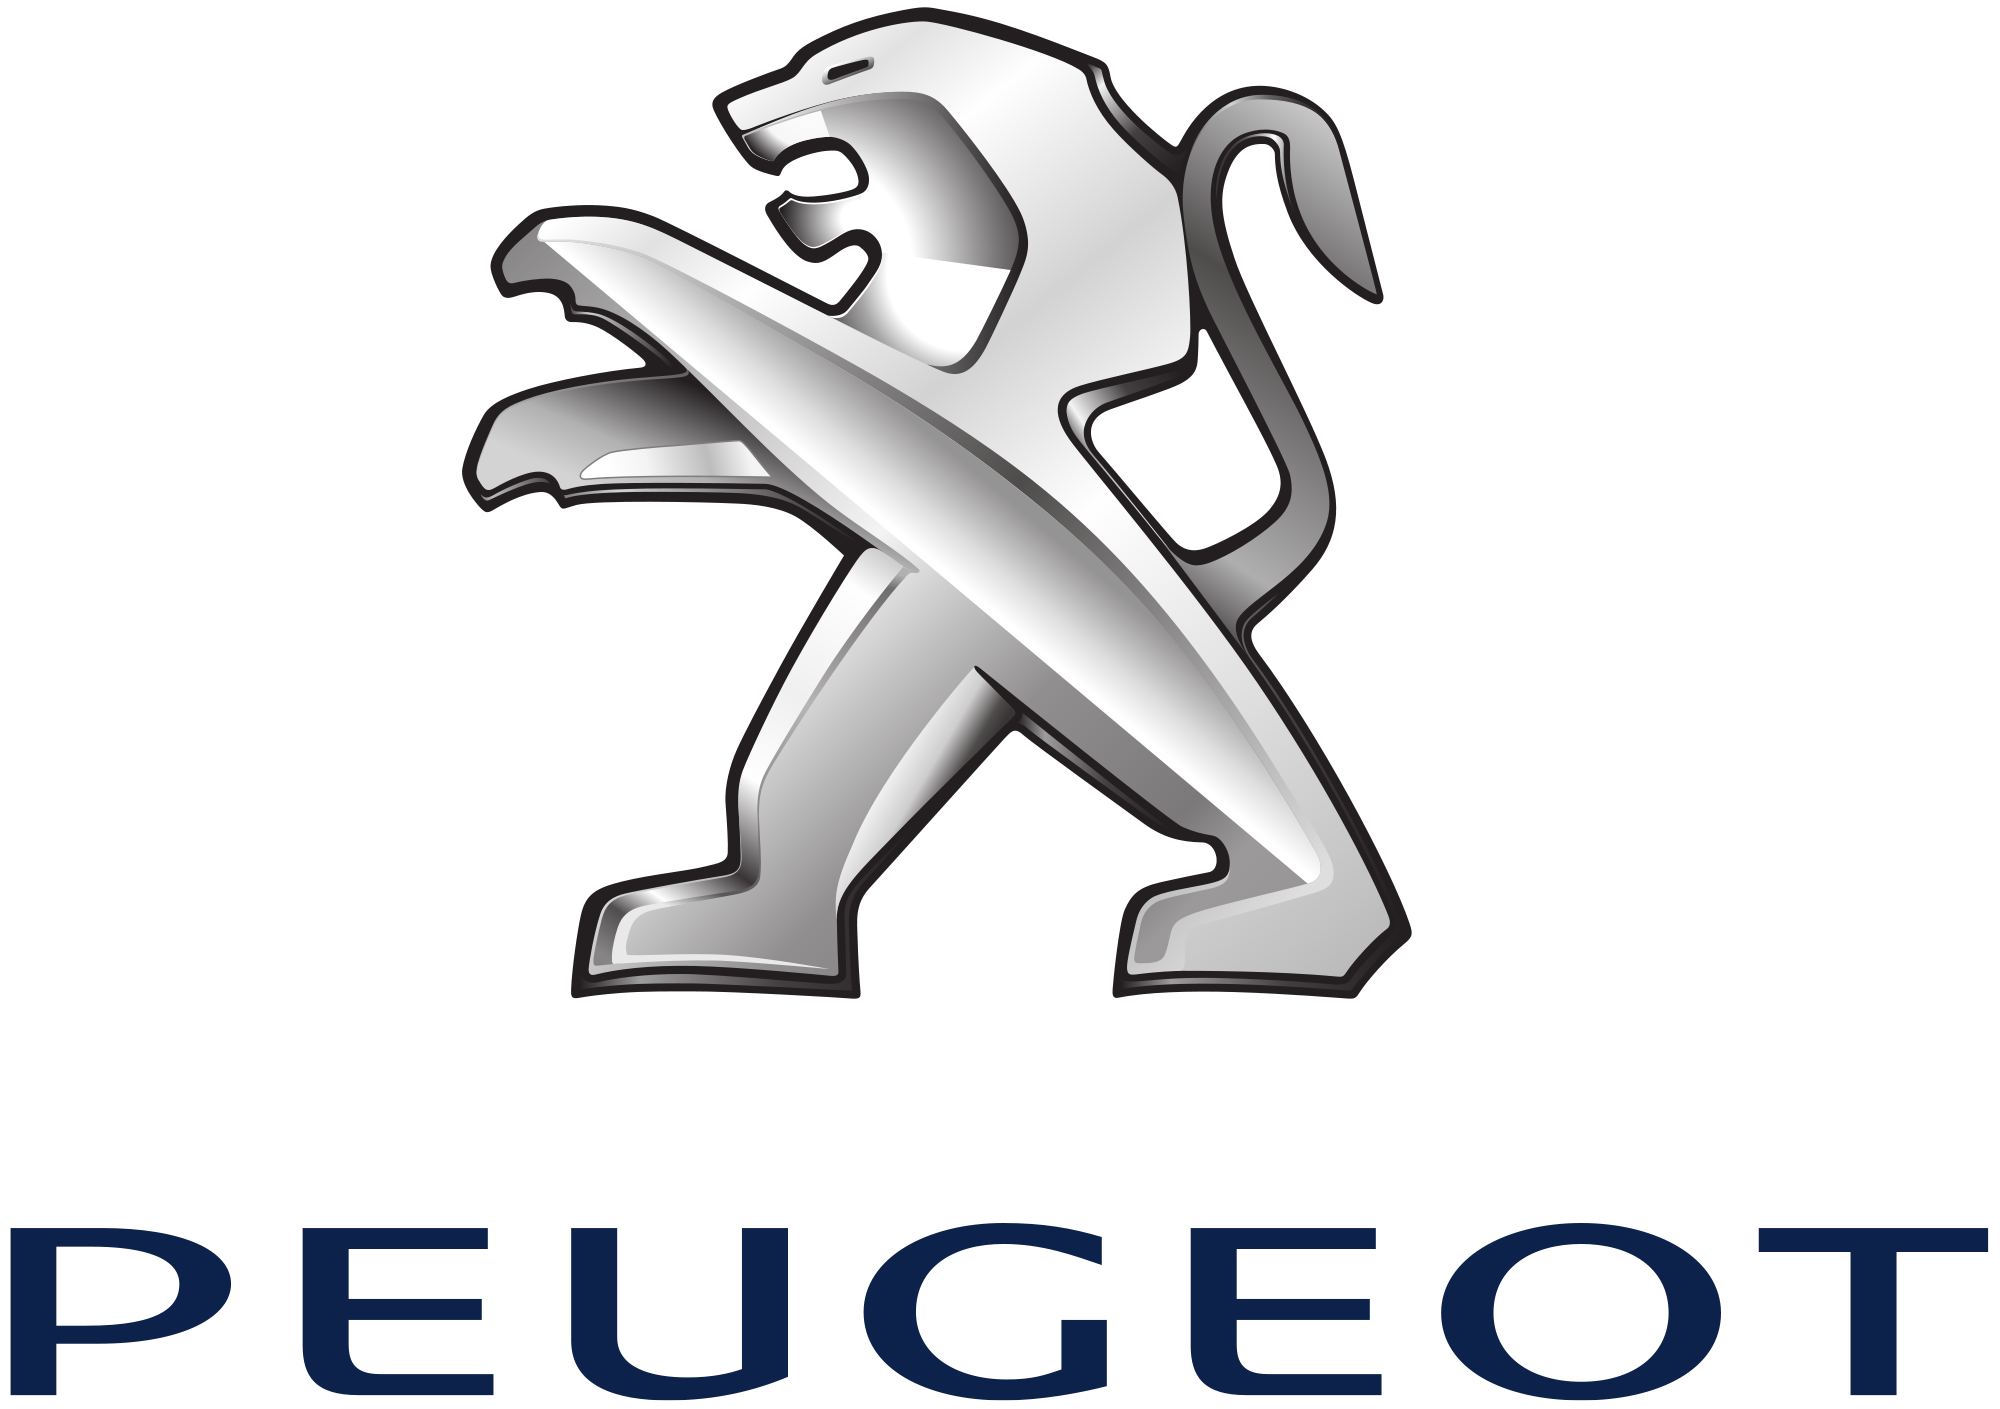 Peugeot logo.svg.png, Peugeot PNG - Free PNG